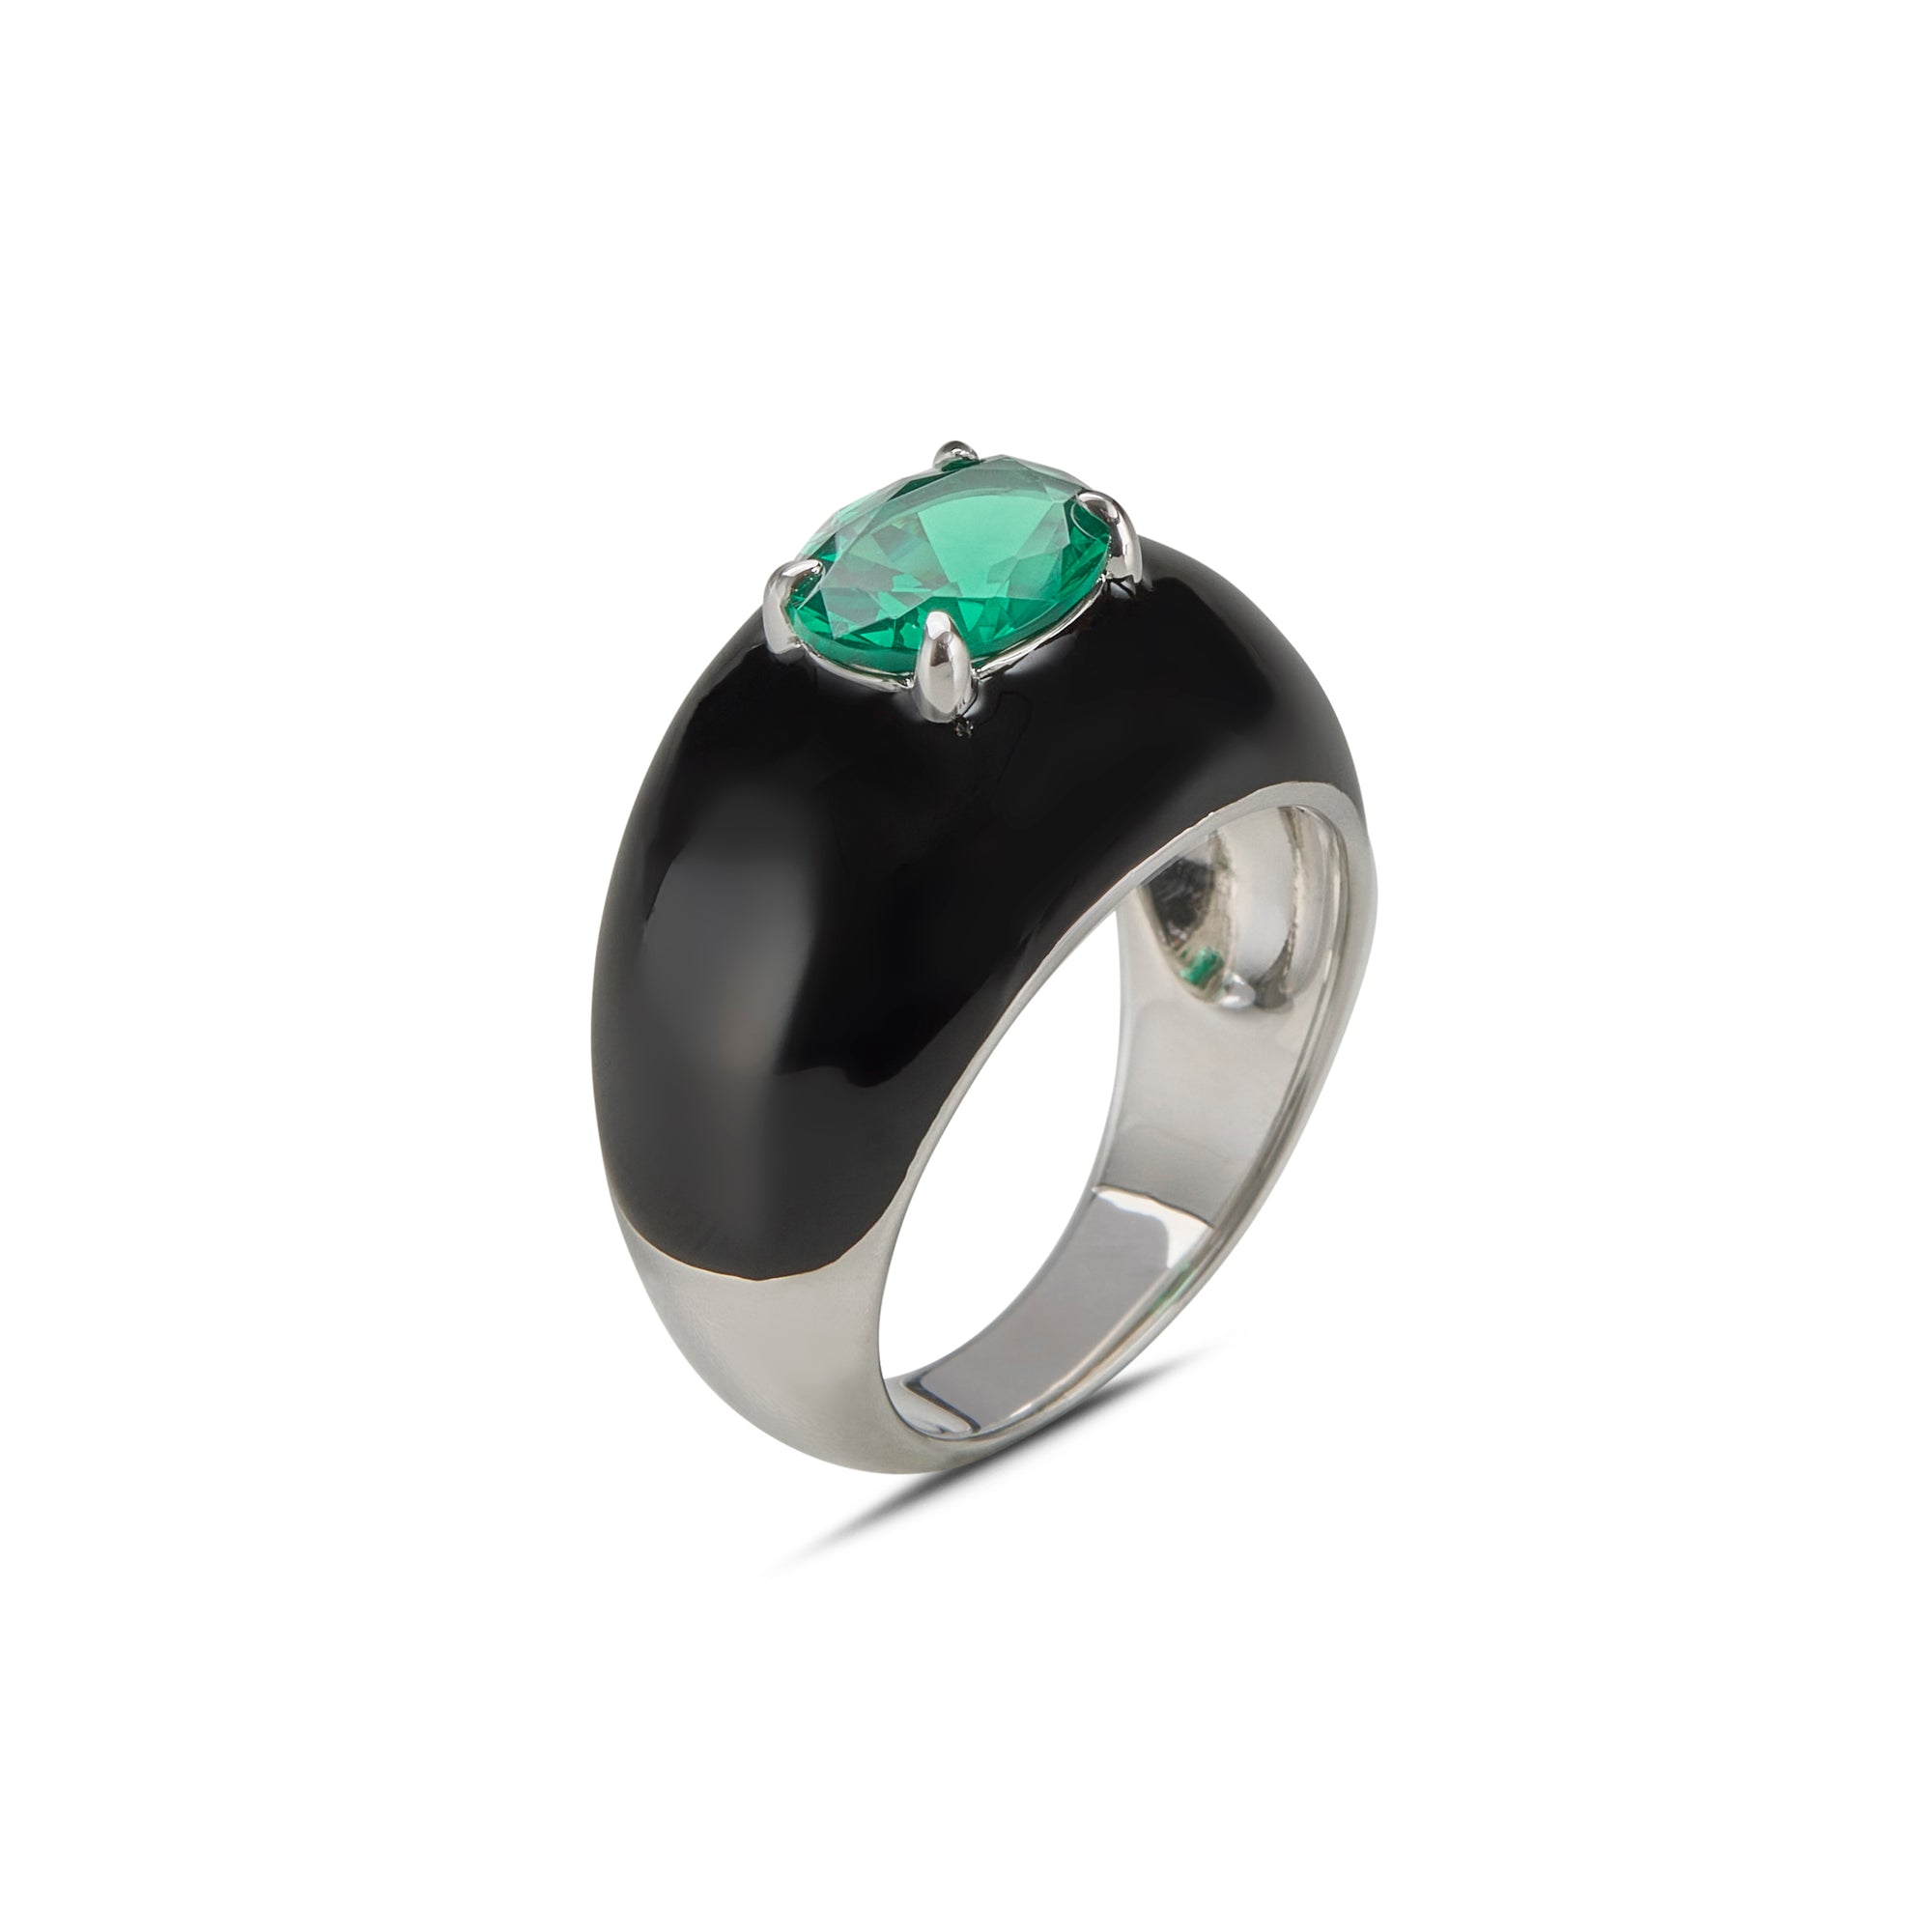 Black Enamel Ring With Gemstone